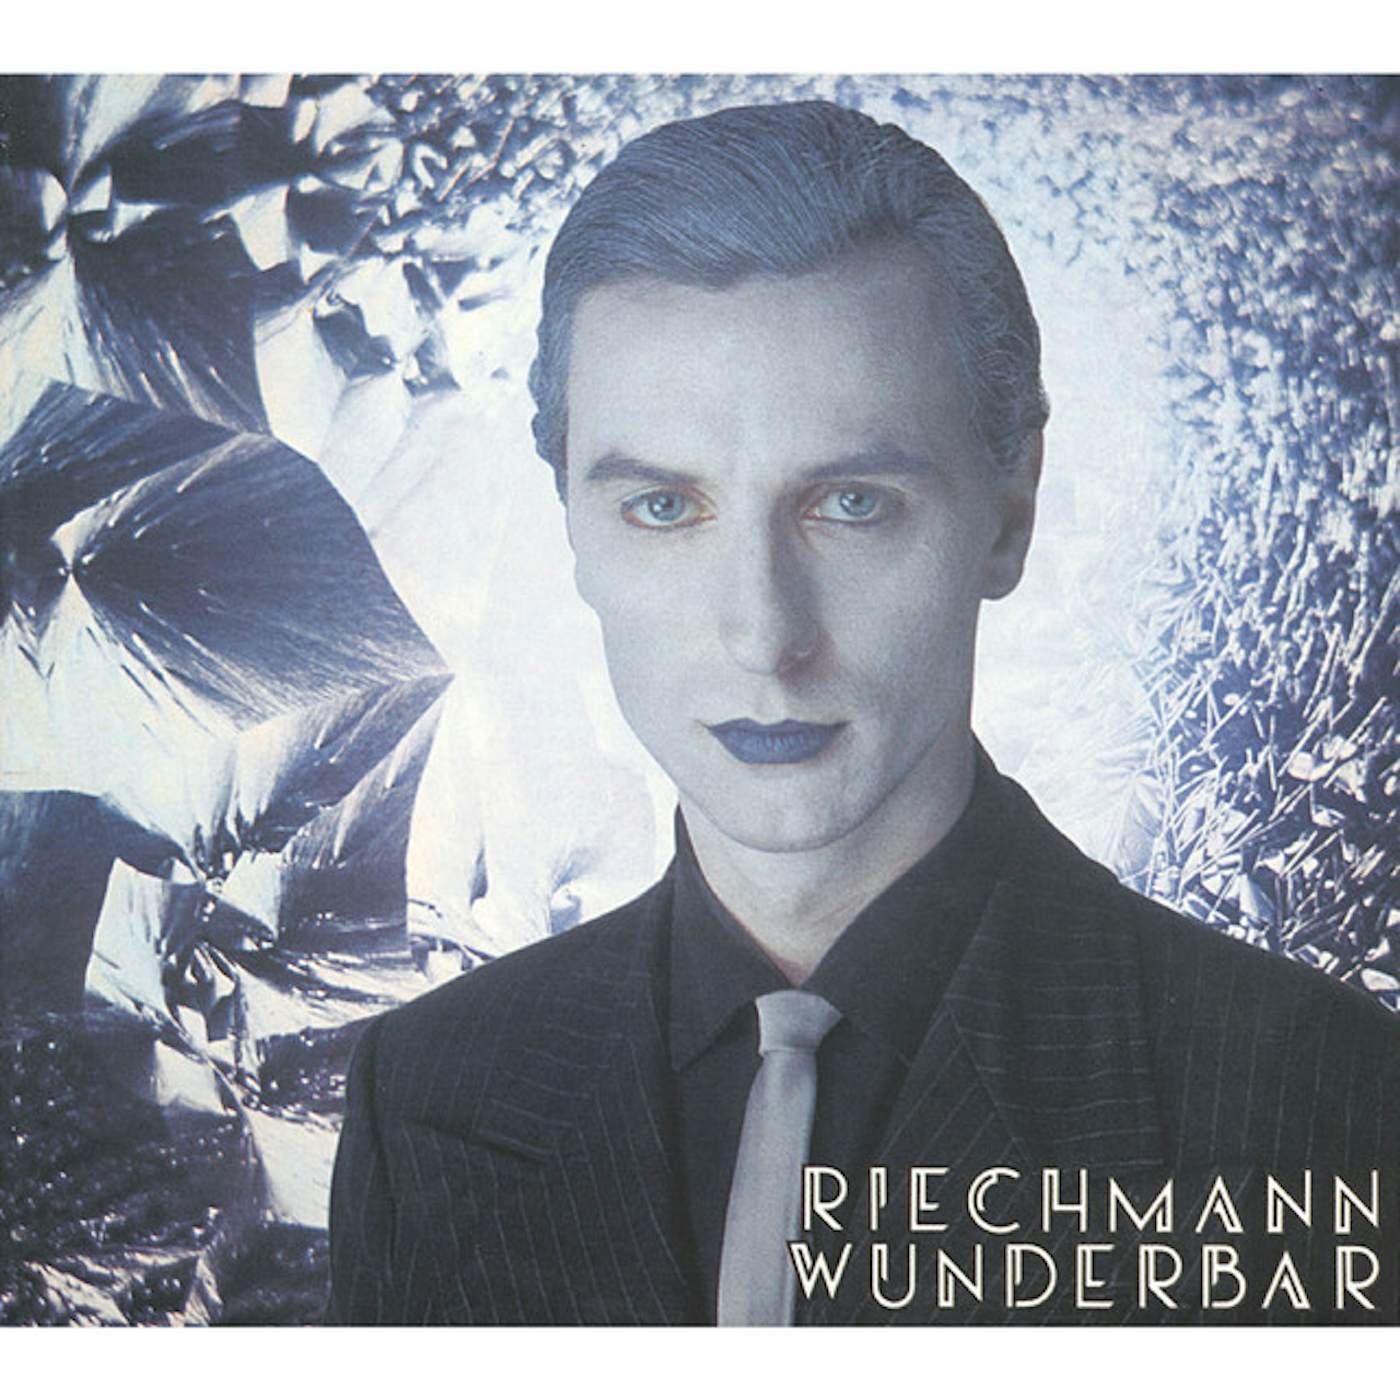 Riechmann Wunderbar Vinyl Record